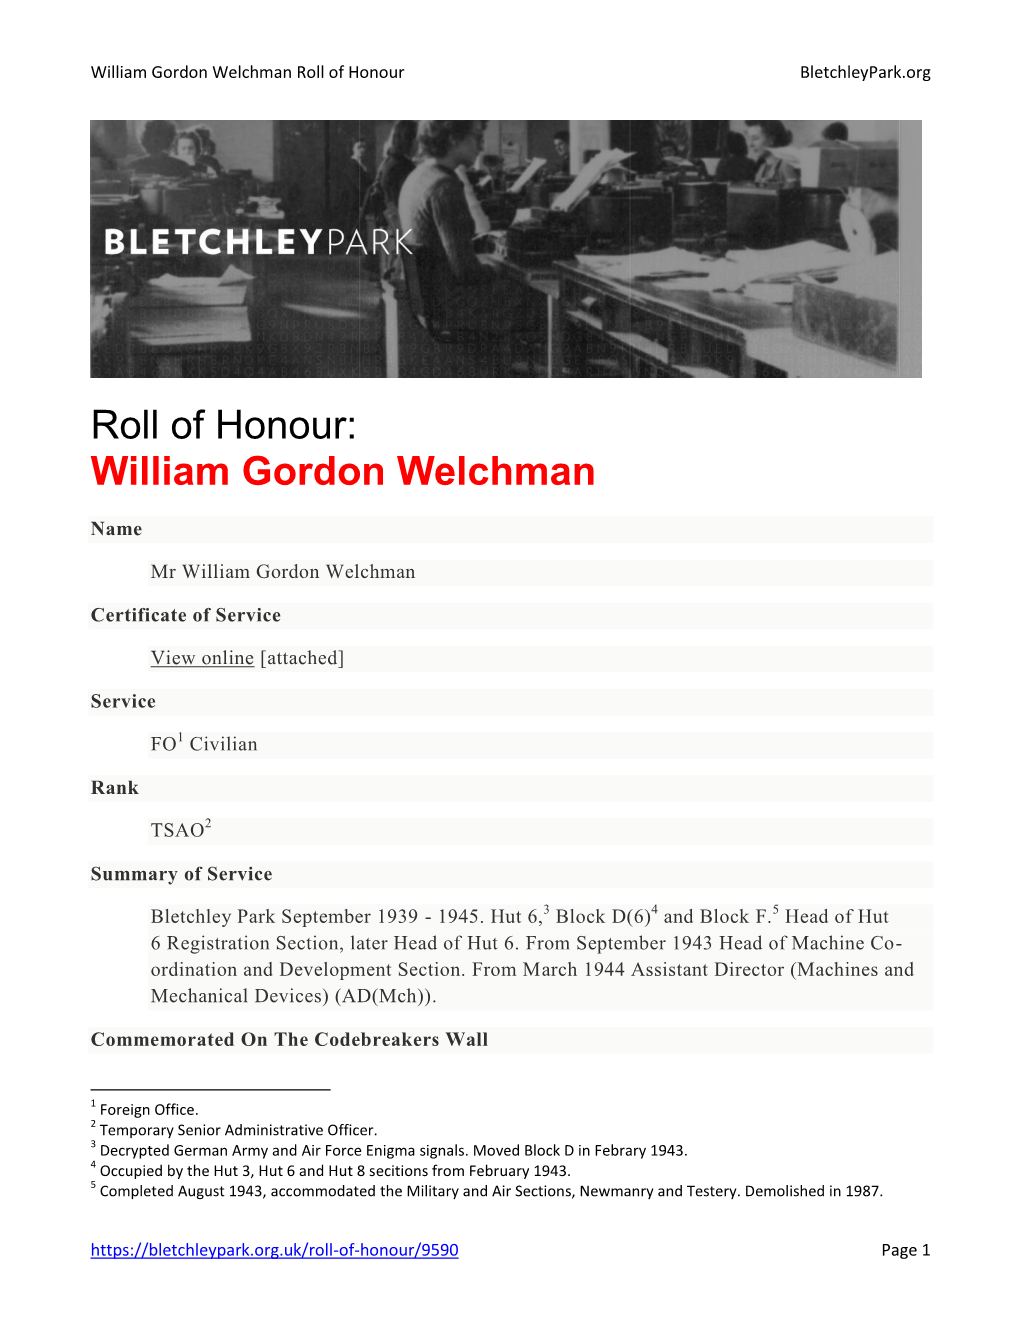 Roll of Honour: William Gordon Welchman